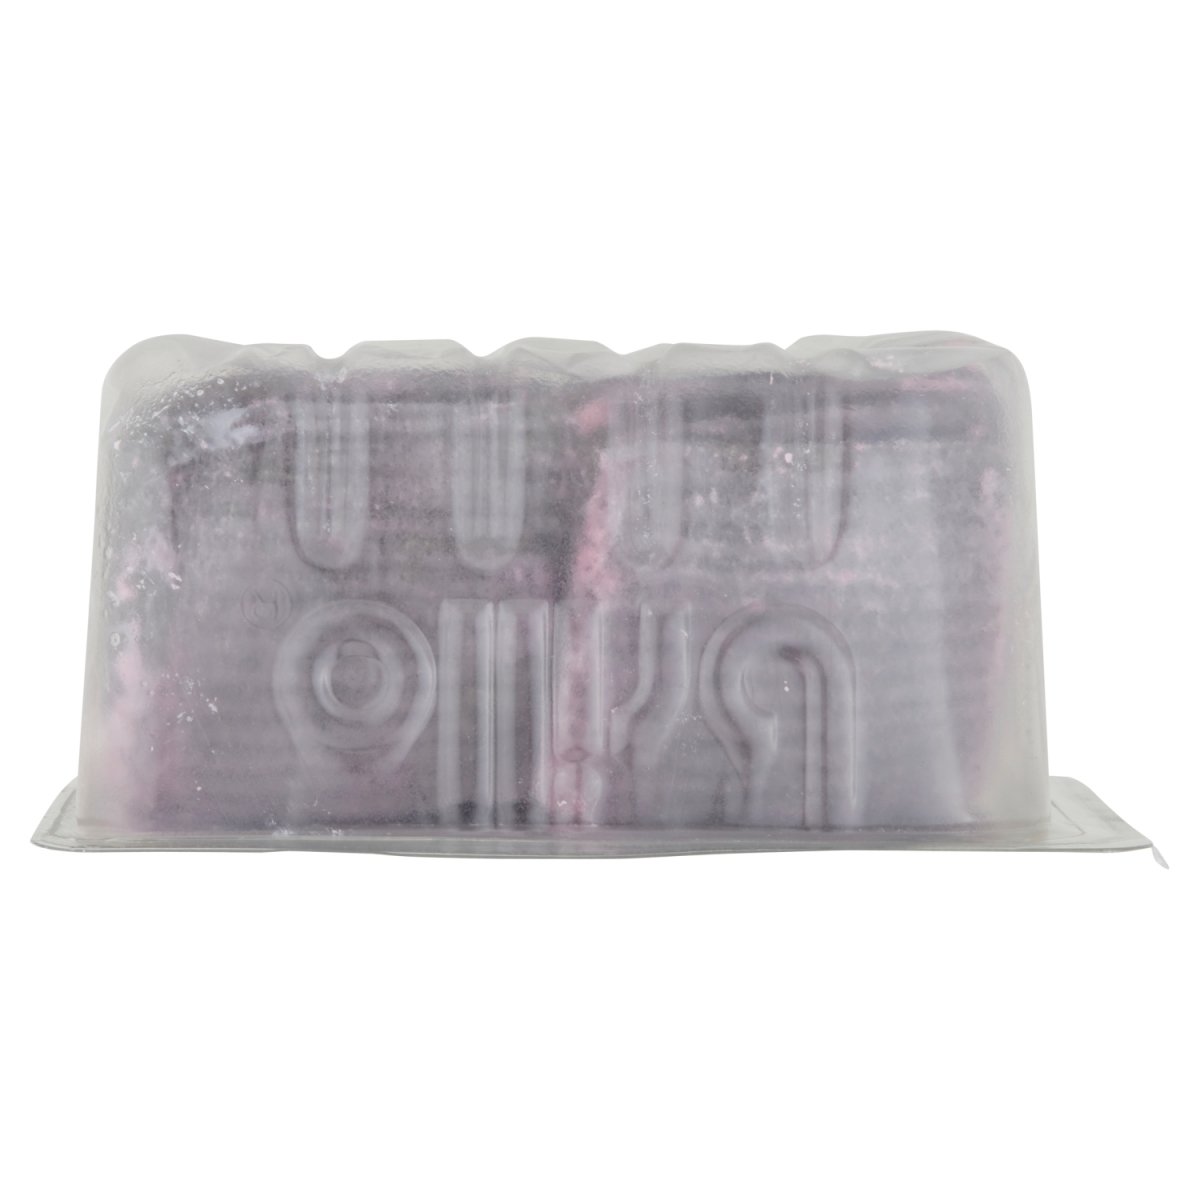 Brillo Soap Pads 10s Punnet - Intamarque 5000204891614